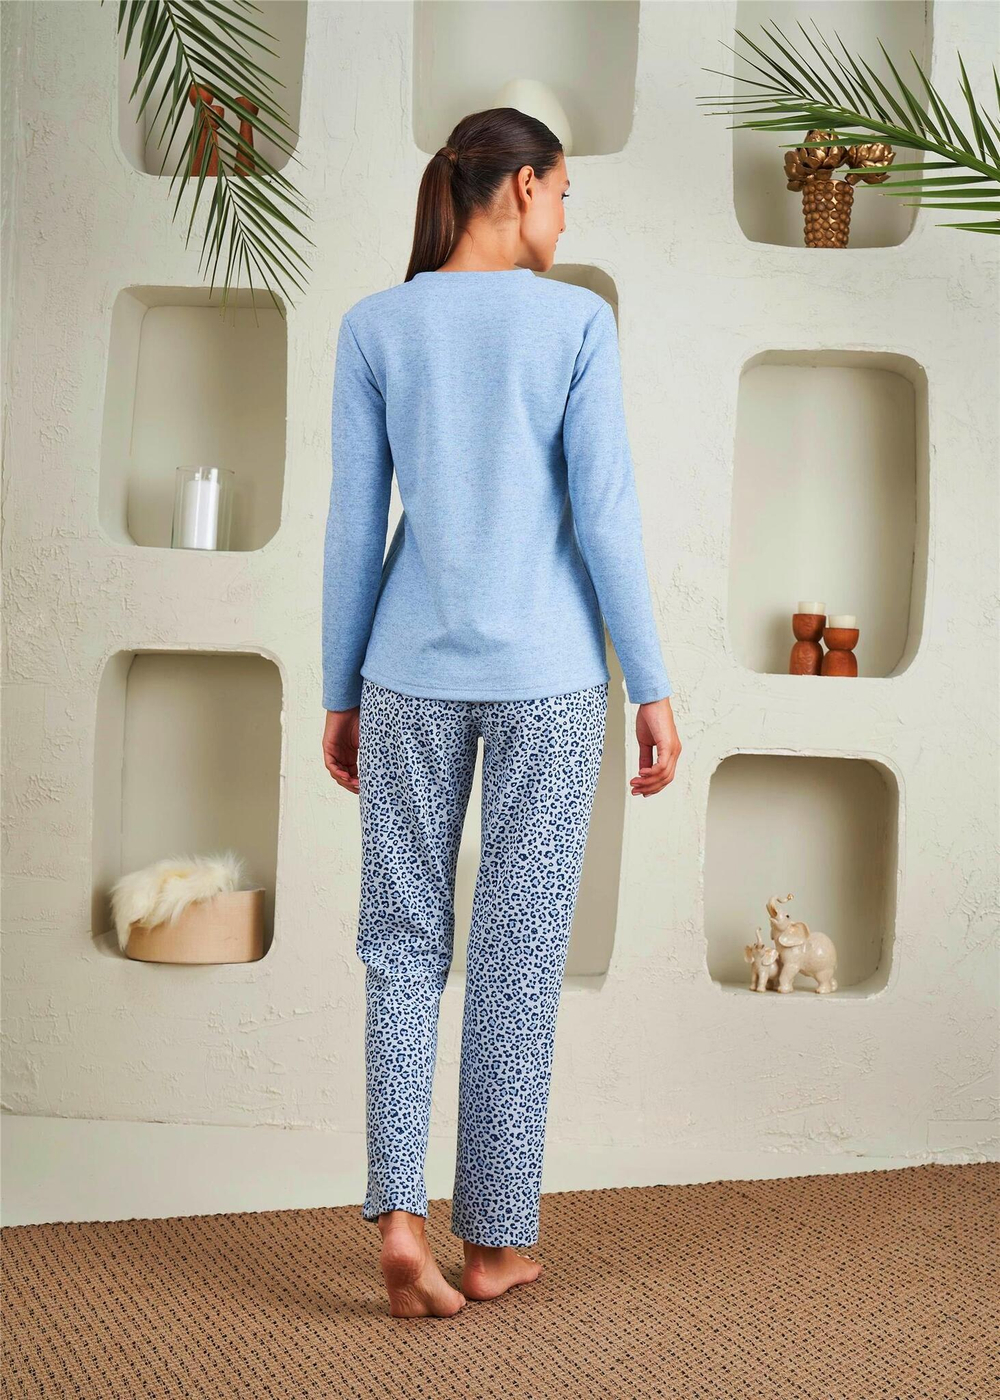 RELAX MODE - Женская пижама с брюками - 10740